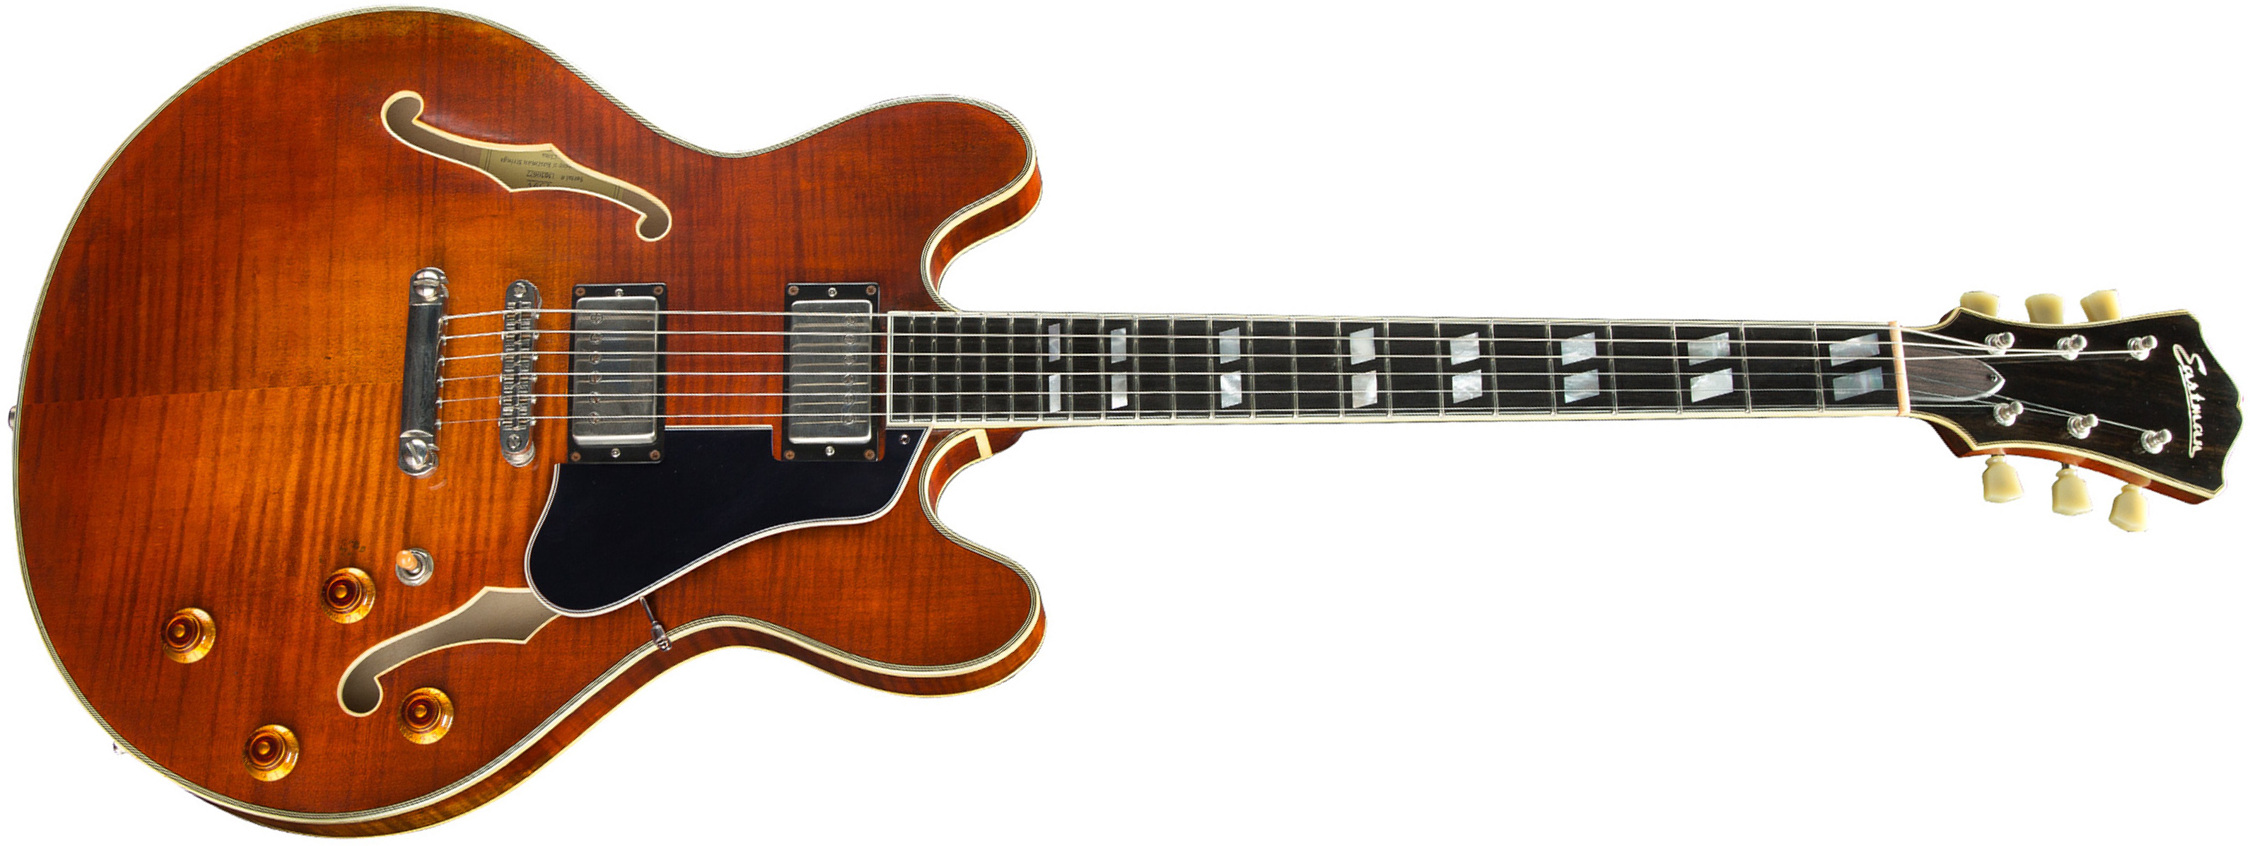 Eastman T59v Thinline 2h Seymour Duncan Ht Eb - Antique Classic - Semi hollow elektriche gitaar - Main picture